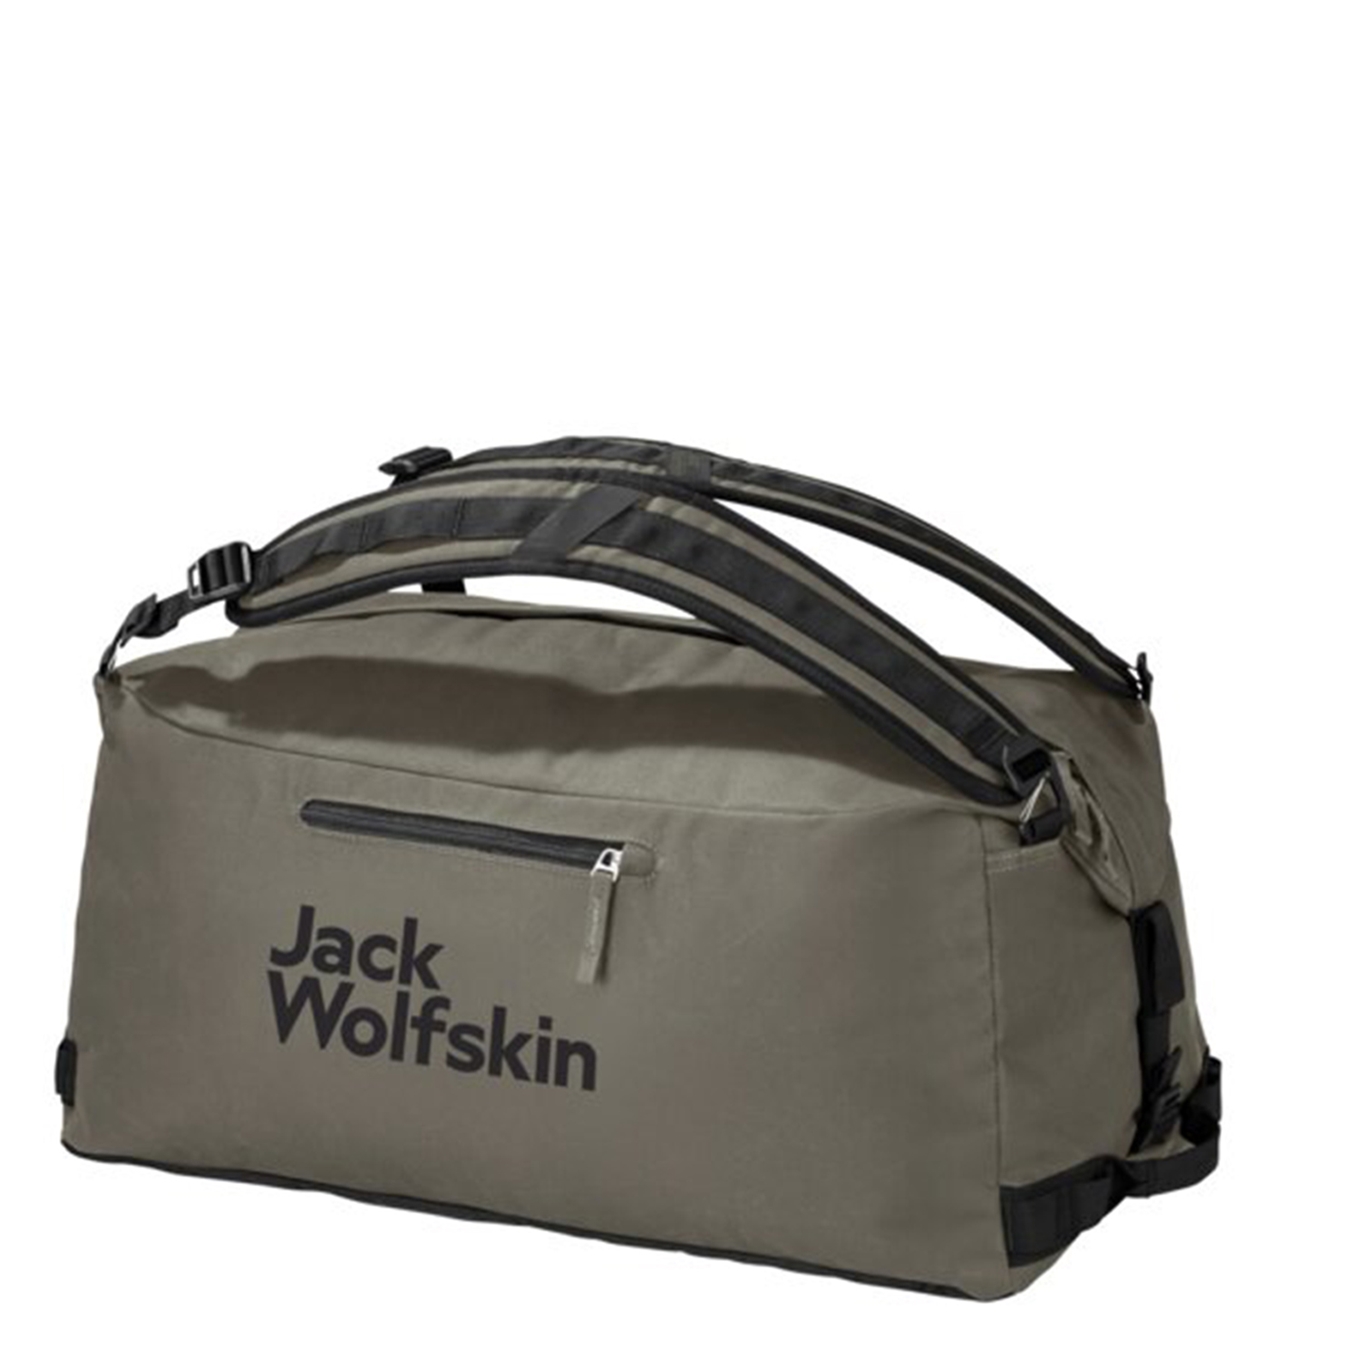 Jack Wolfskin Traveltopia Duffle 45 dusty olive Weekendtas